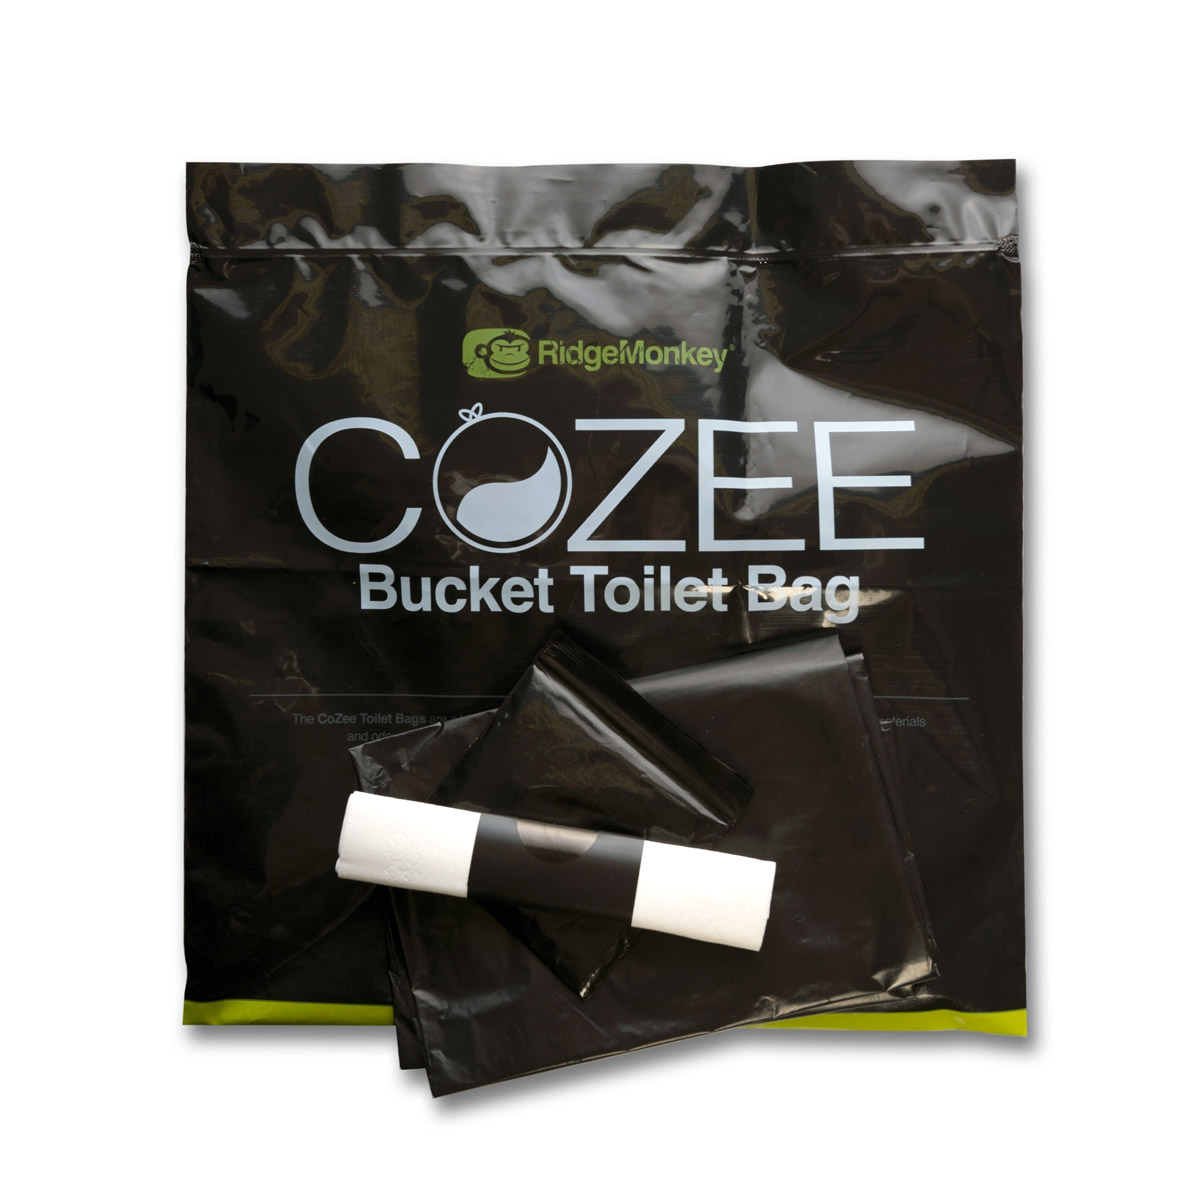 Ridgemonkey cozee toilet Bags